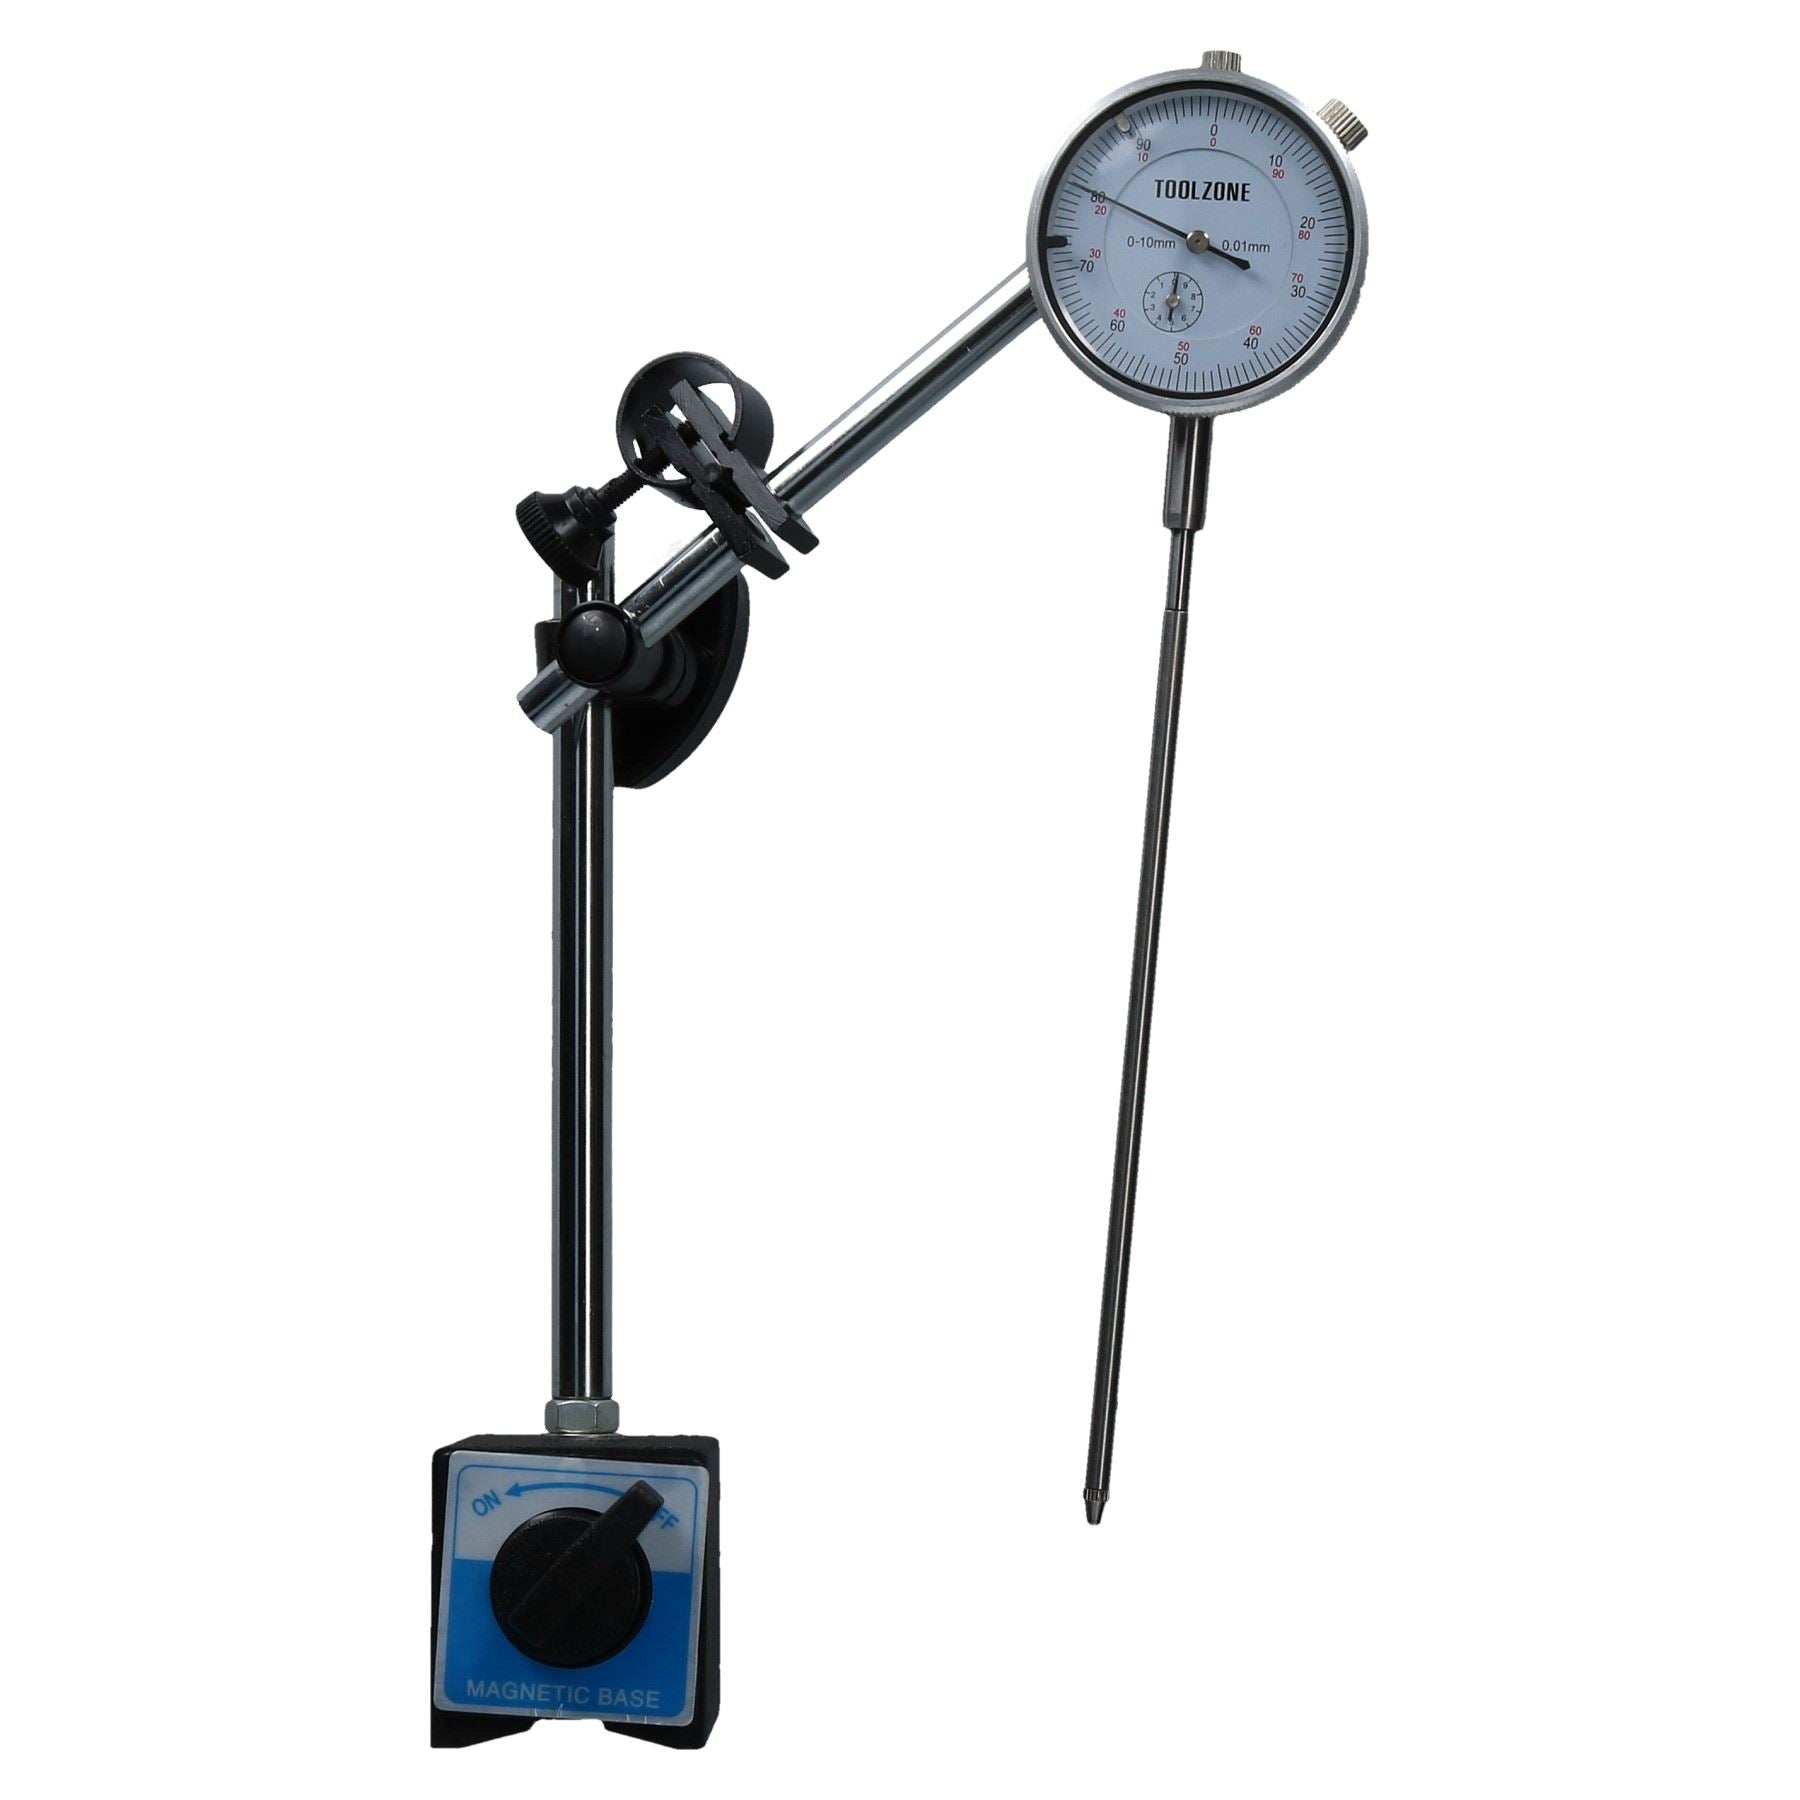 Dial test indicator DTI Gauge & Magnetic Base Stand Clock Gauge Extra Long